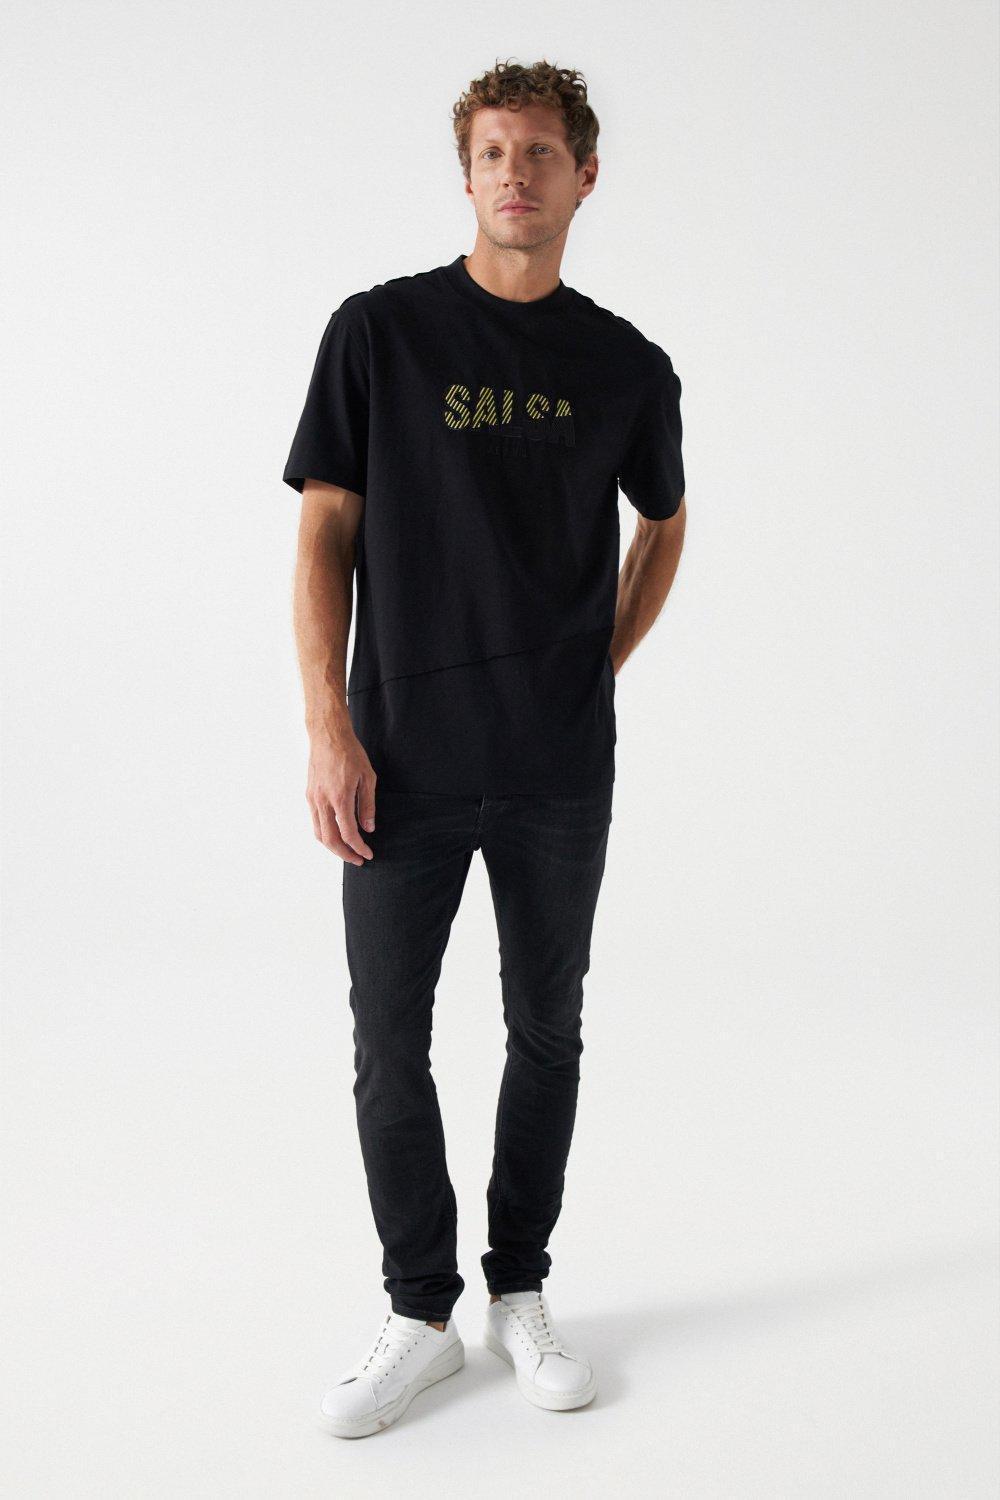 Salsa Jeans - Black T-Shirt With Salsa Logo